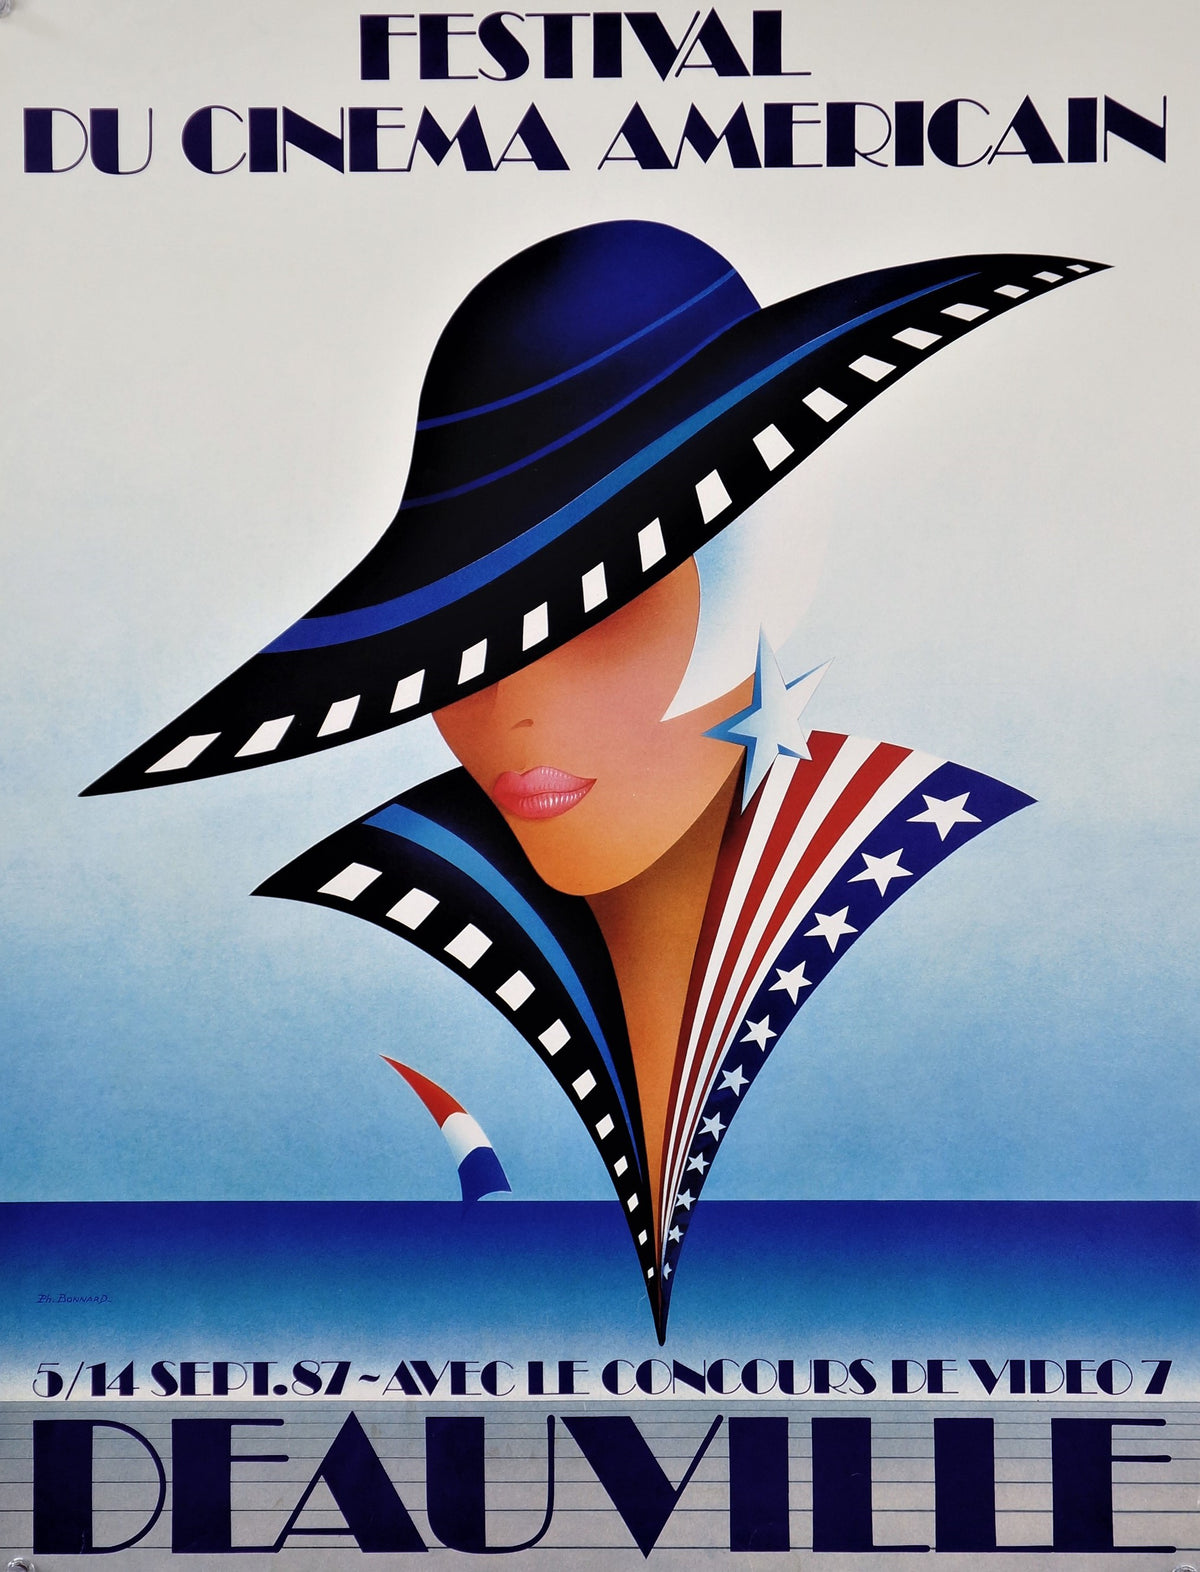 Deauville American Film Festival - Authentic Vintage Poster